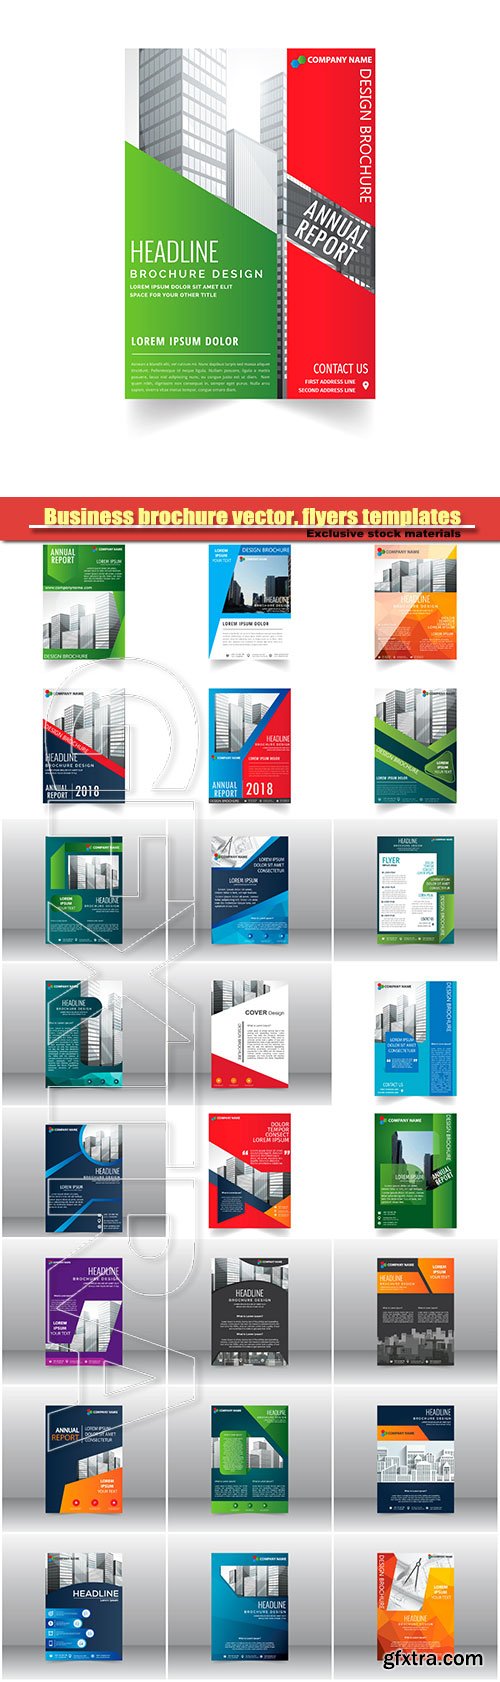 Business brochure vector, flyers templates #14